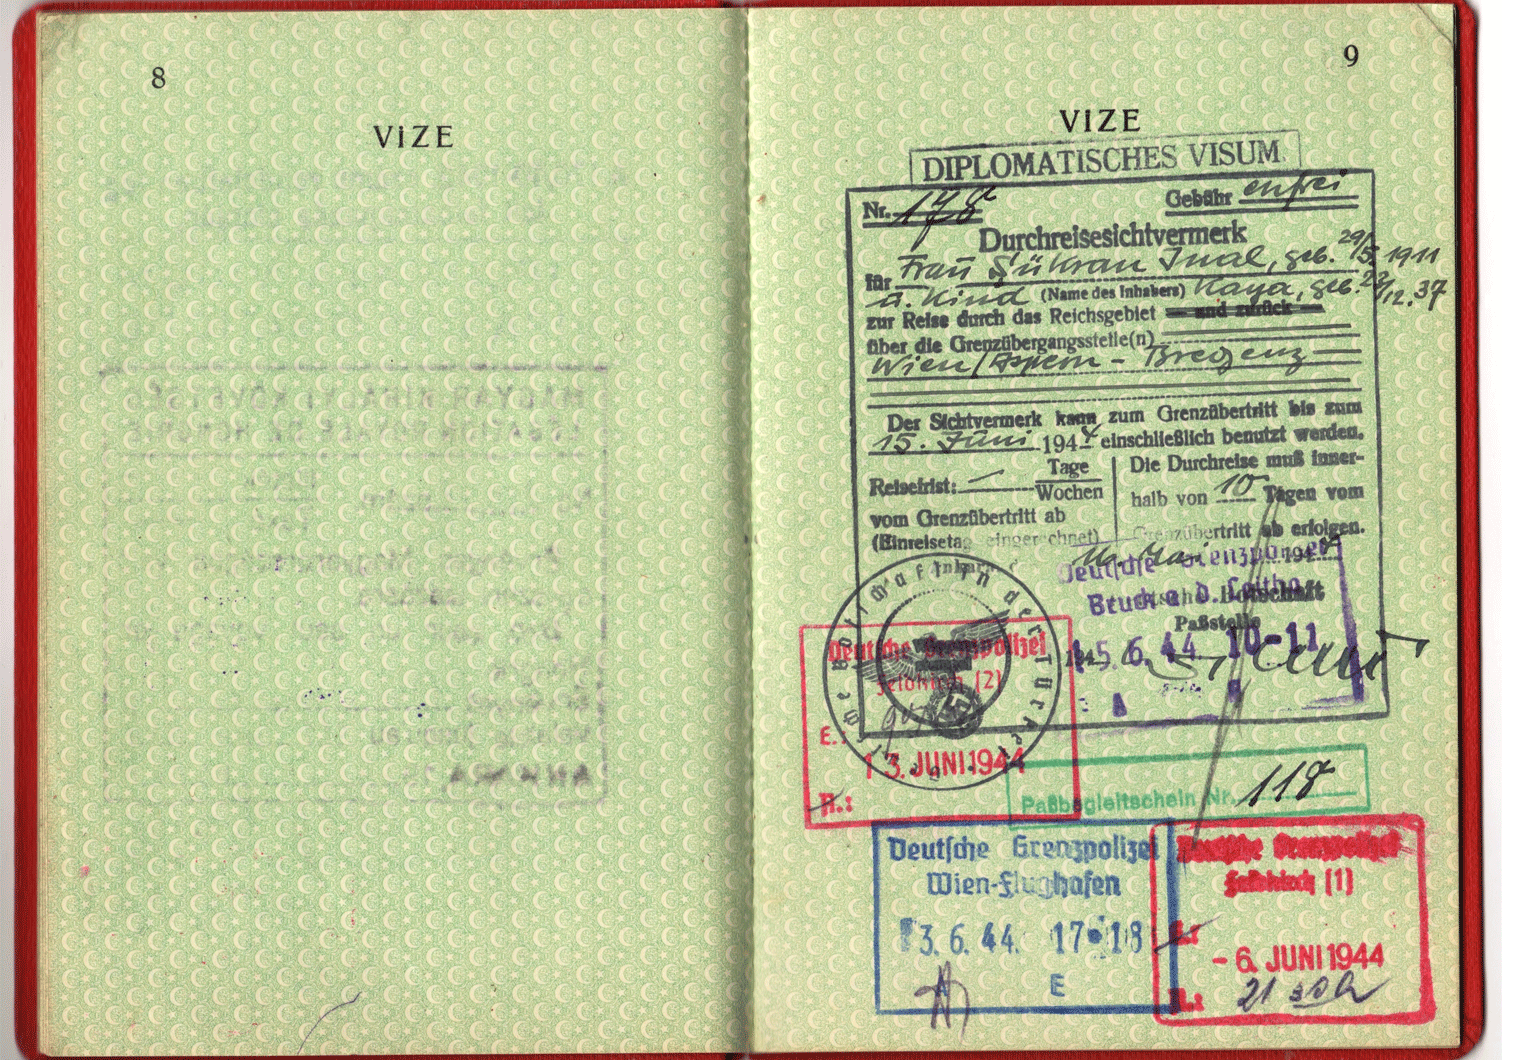 WW2 German Diplomatic passport.